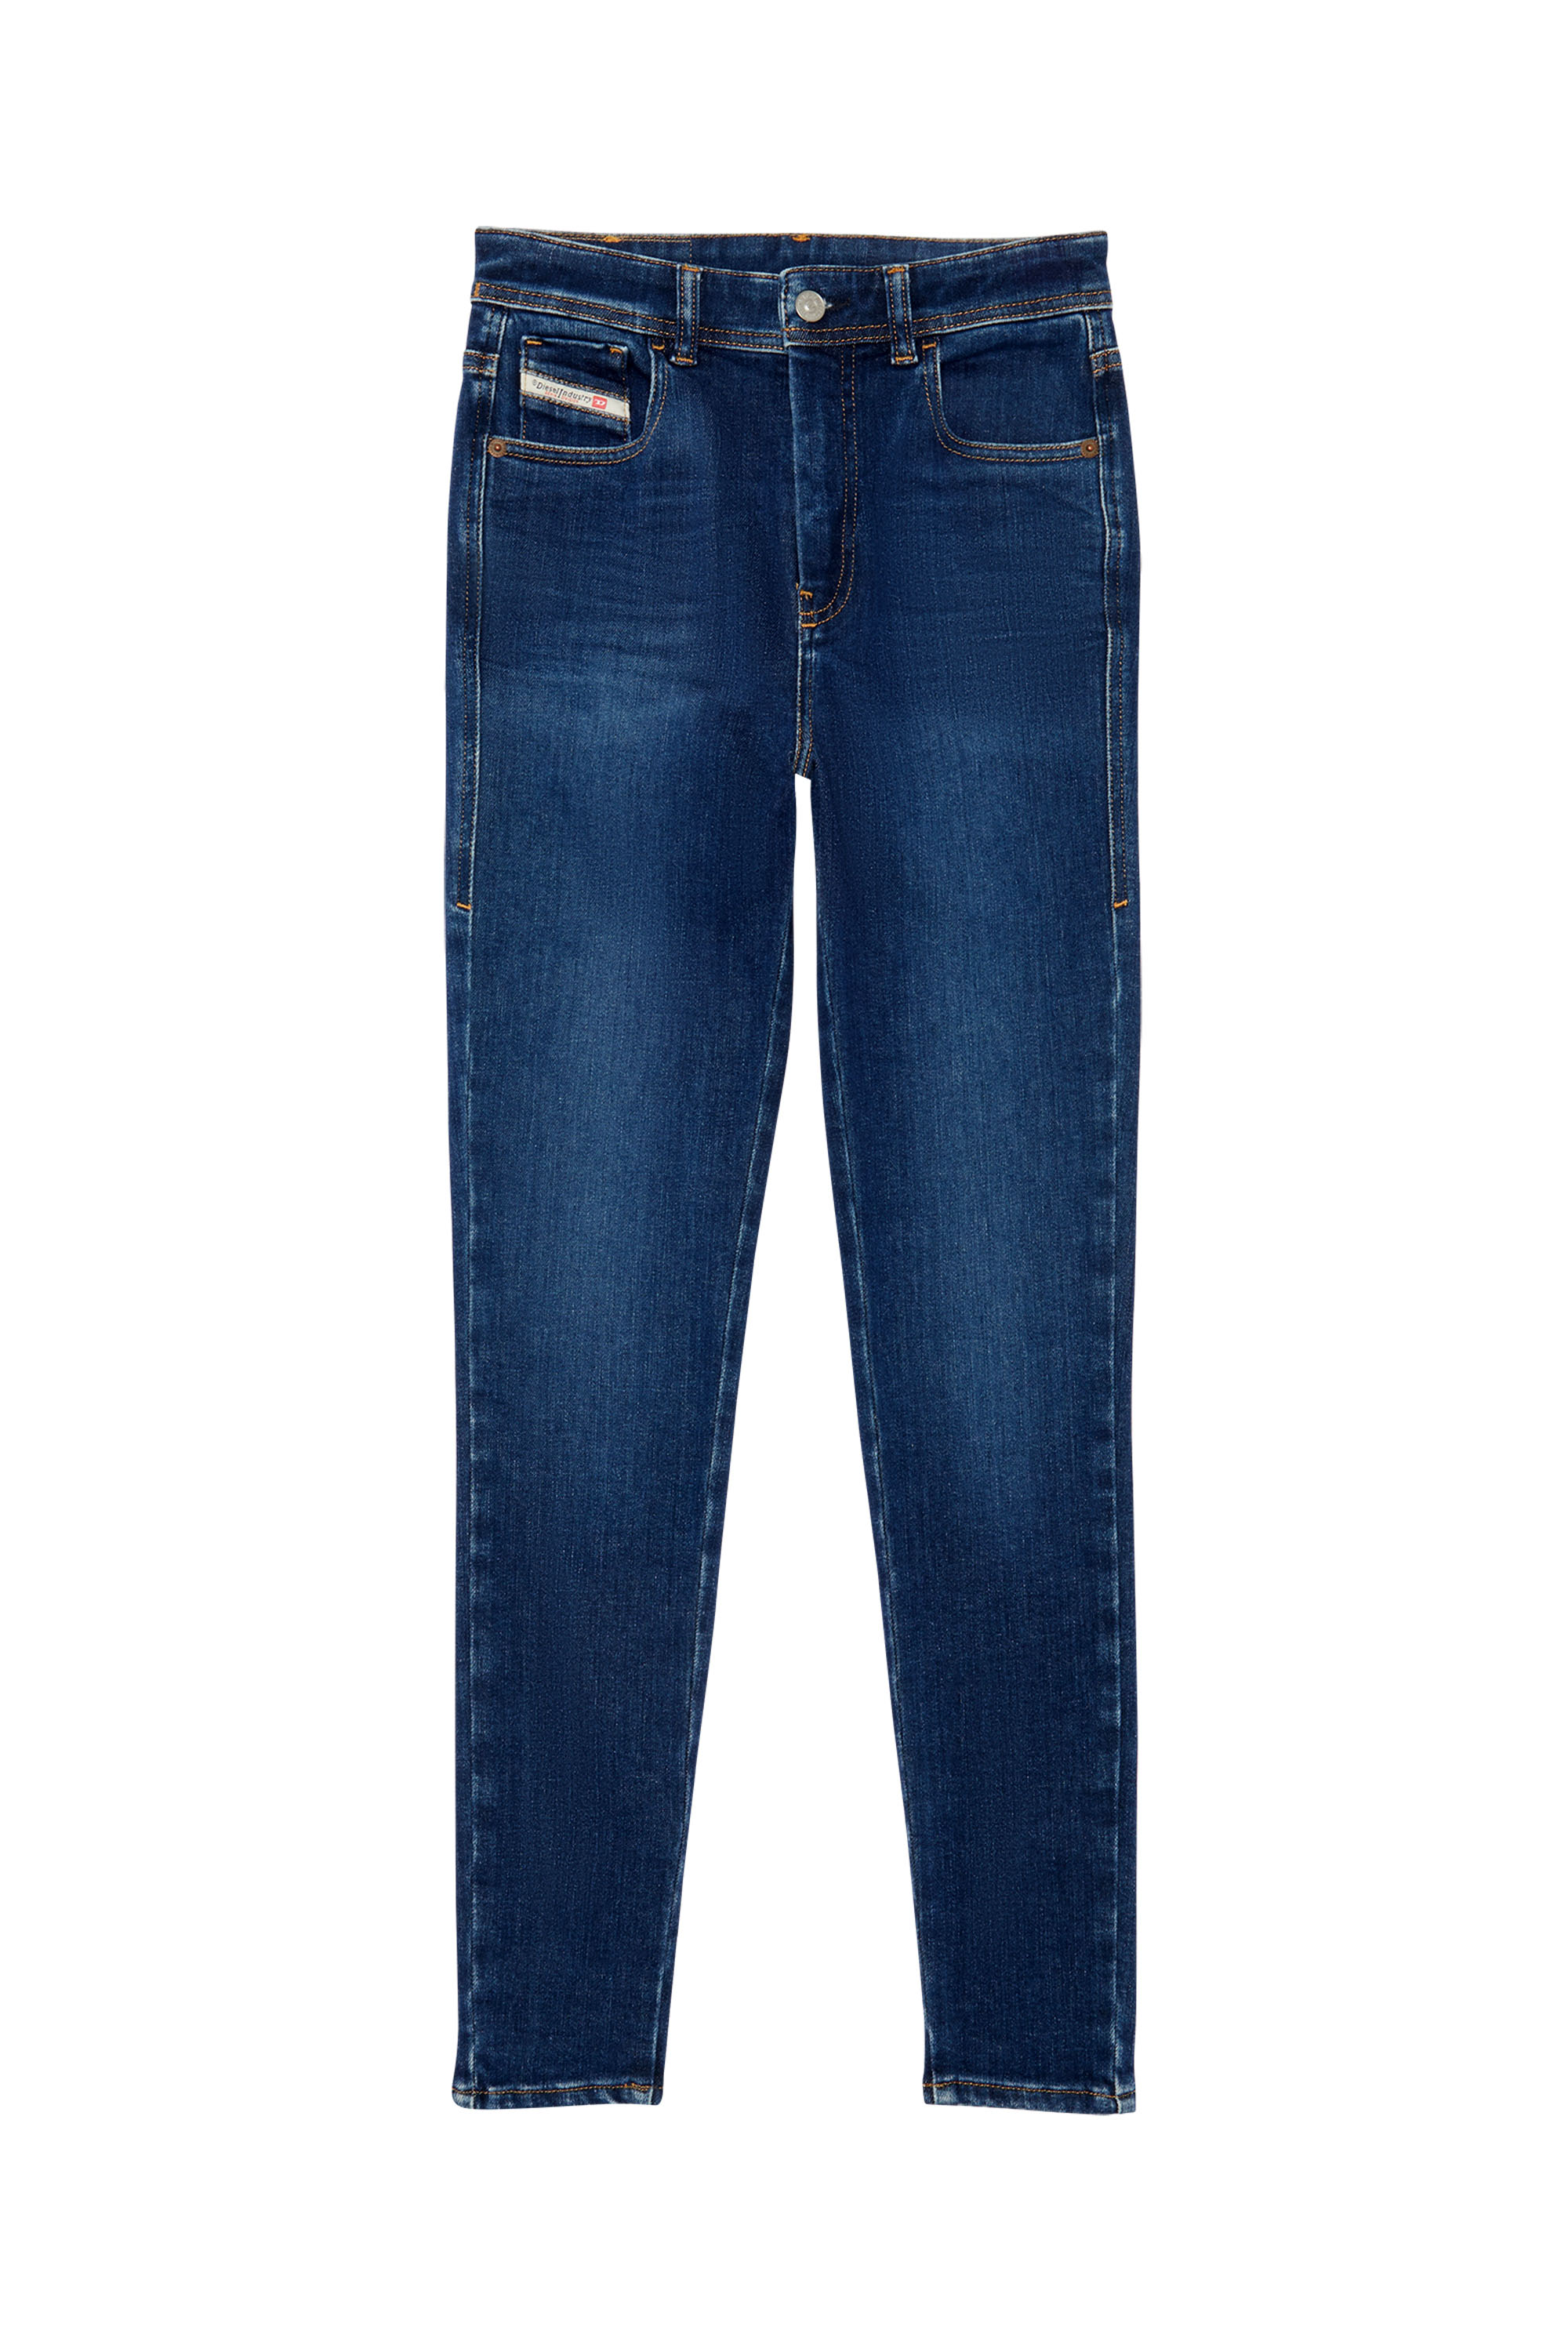 Diesel jeans damen bootcut - Der absolute TOP-Favorit unserer Produkttester